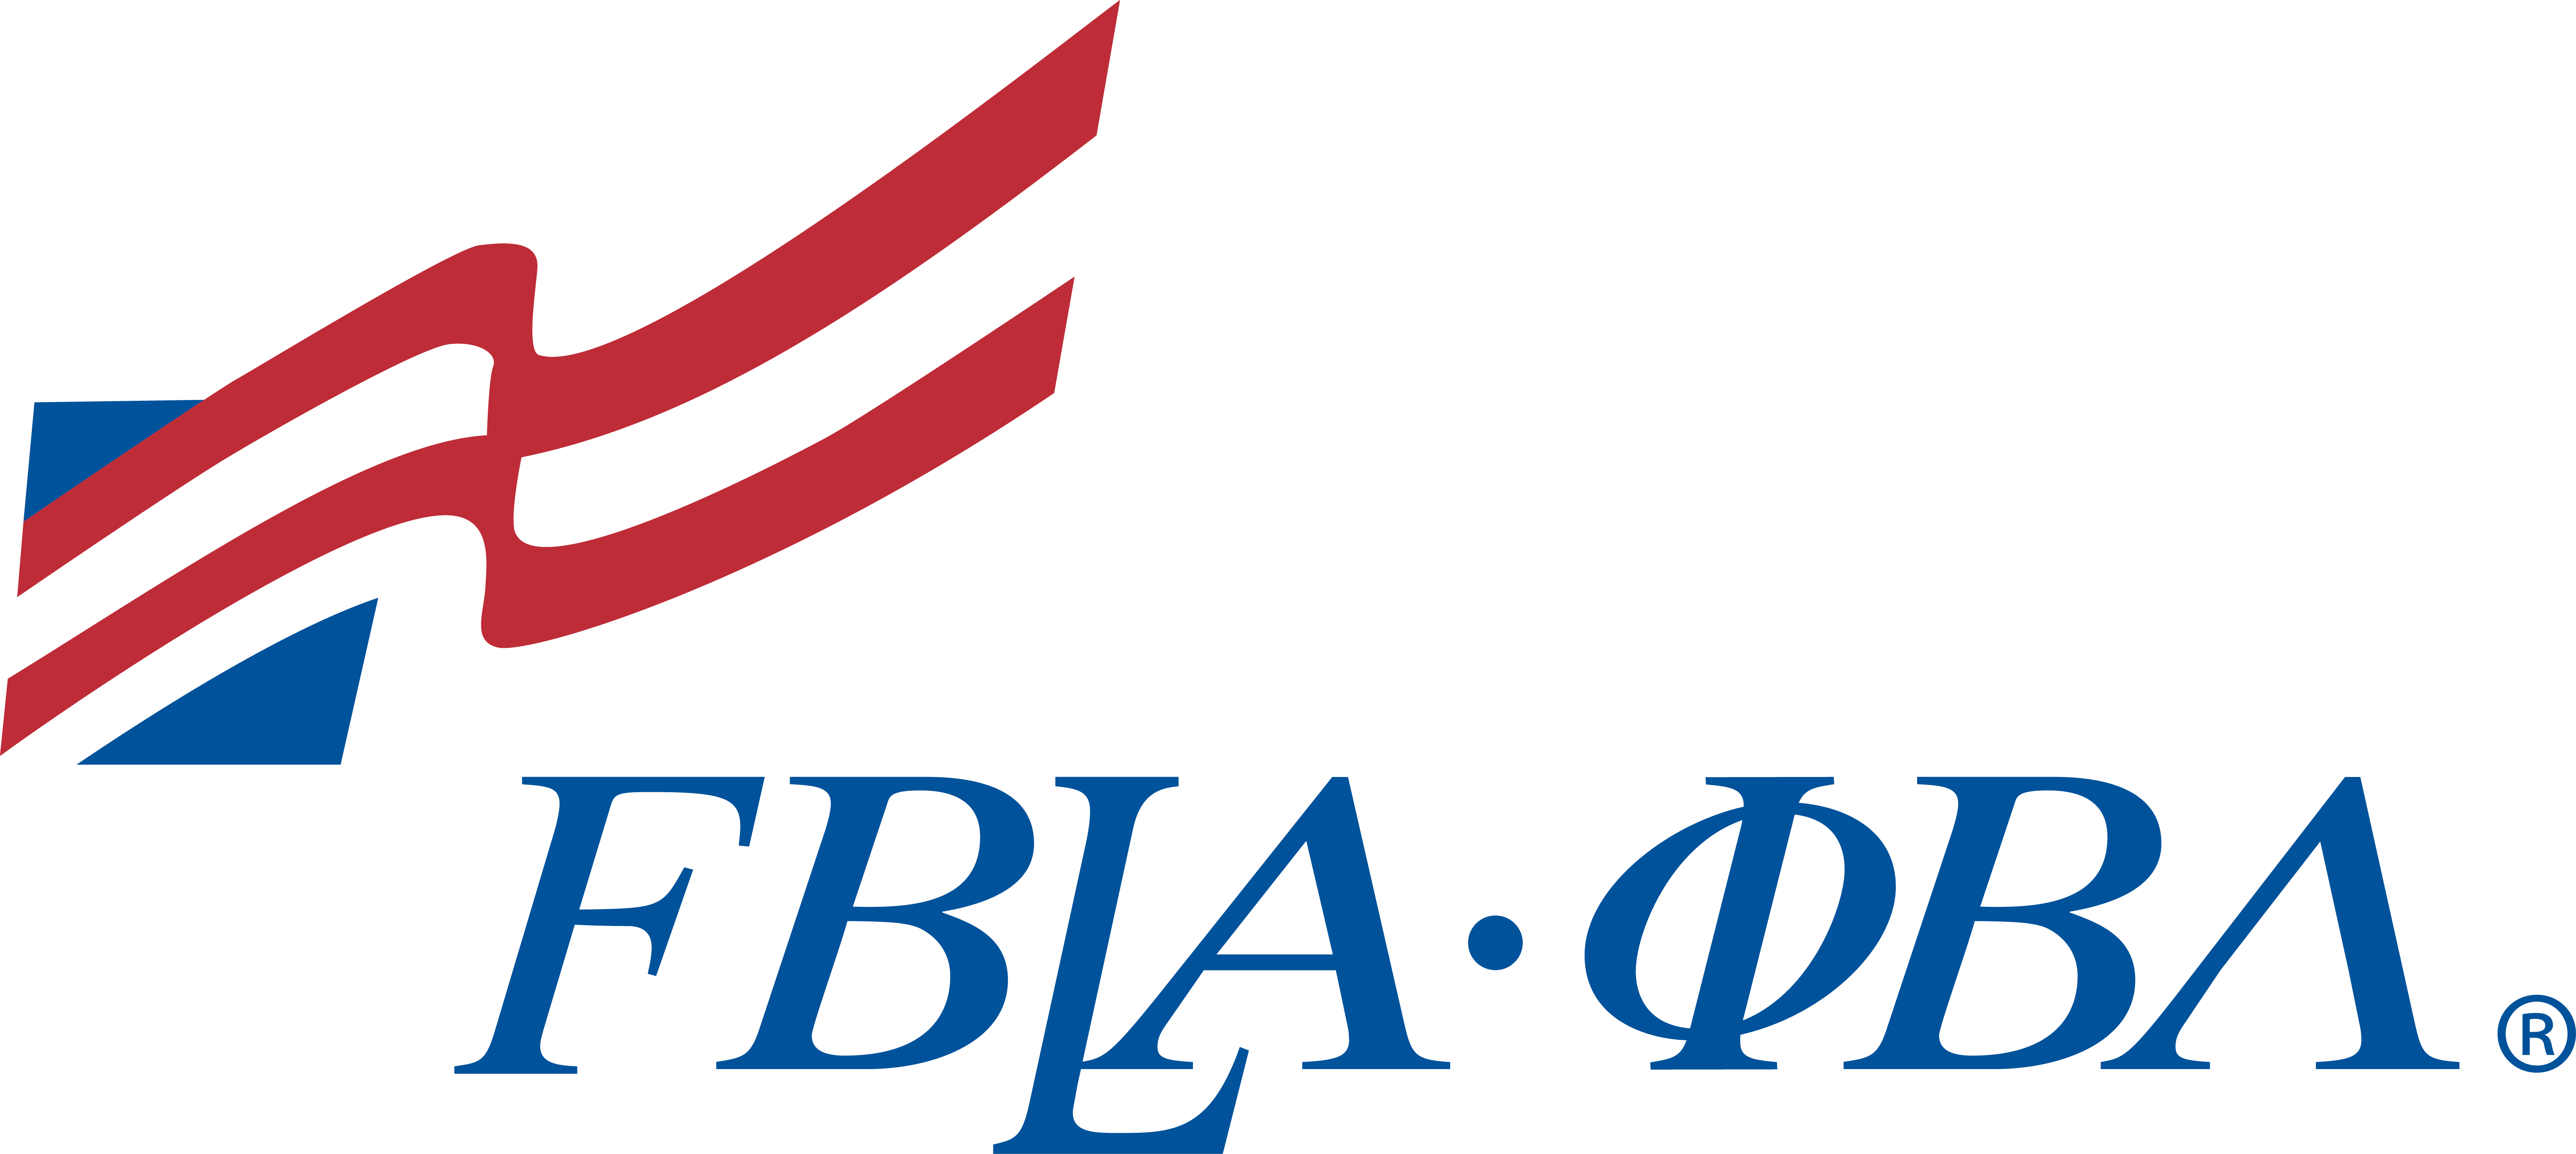 Fbla Pbl Logos Image Official